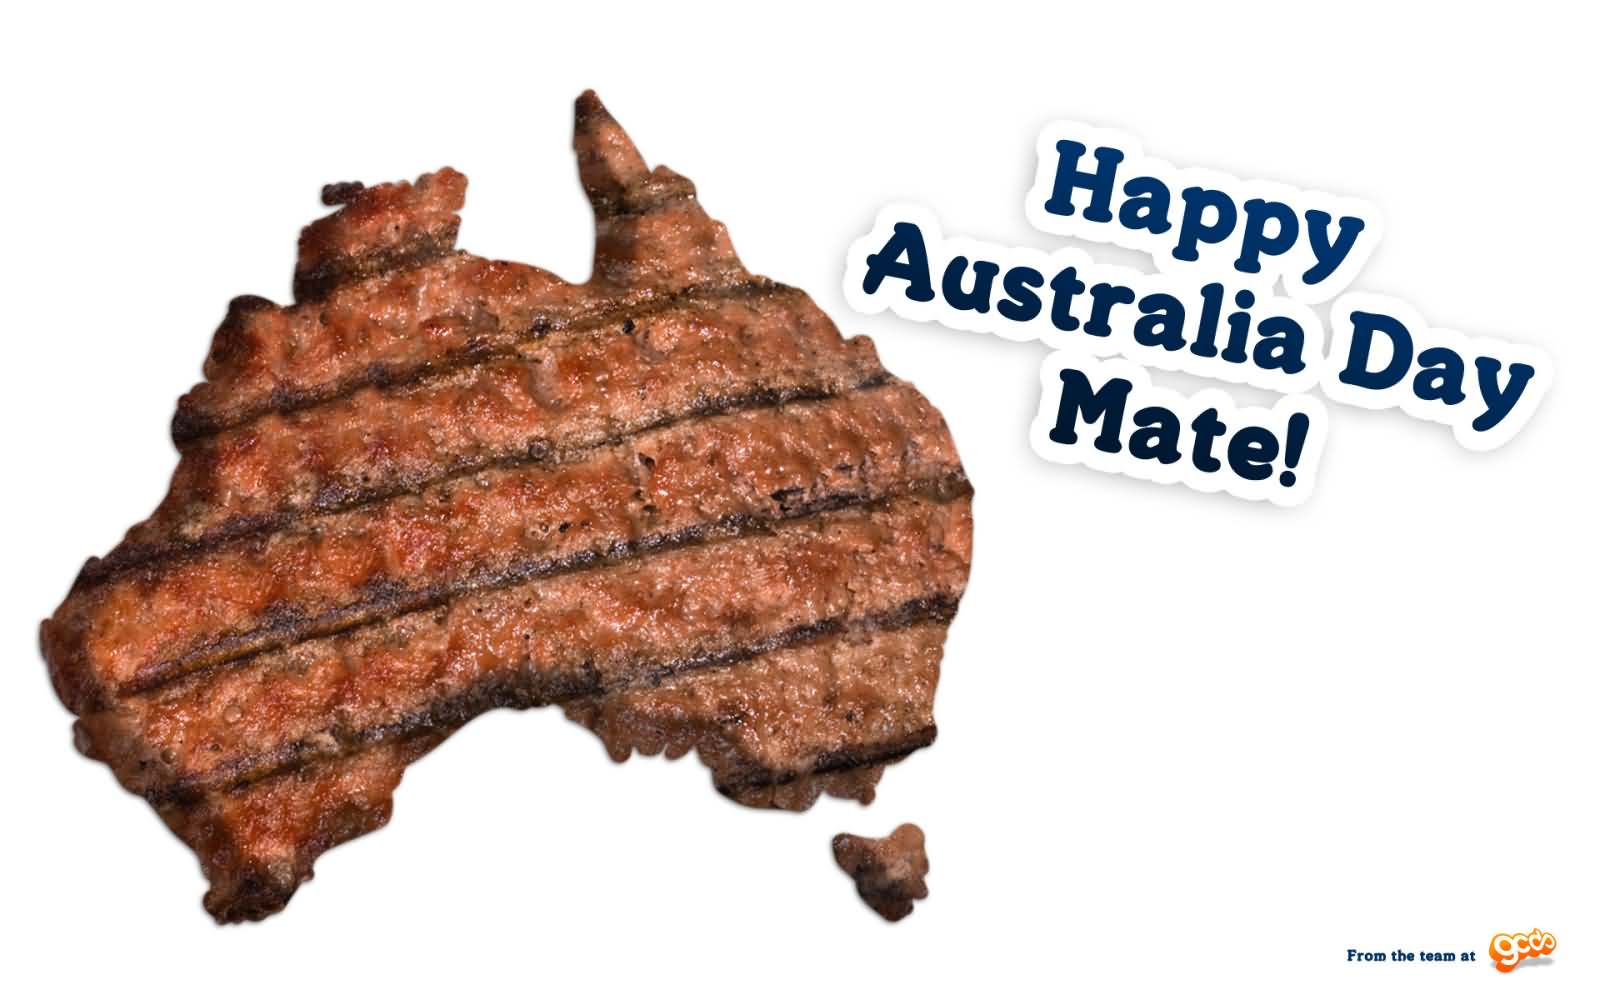 Happy Australia Day Mate